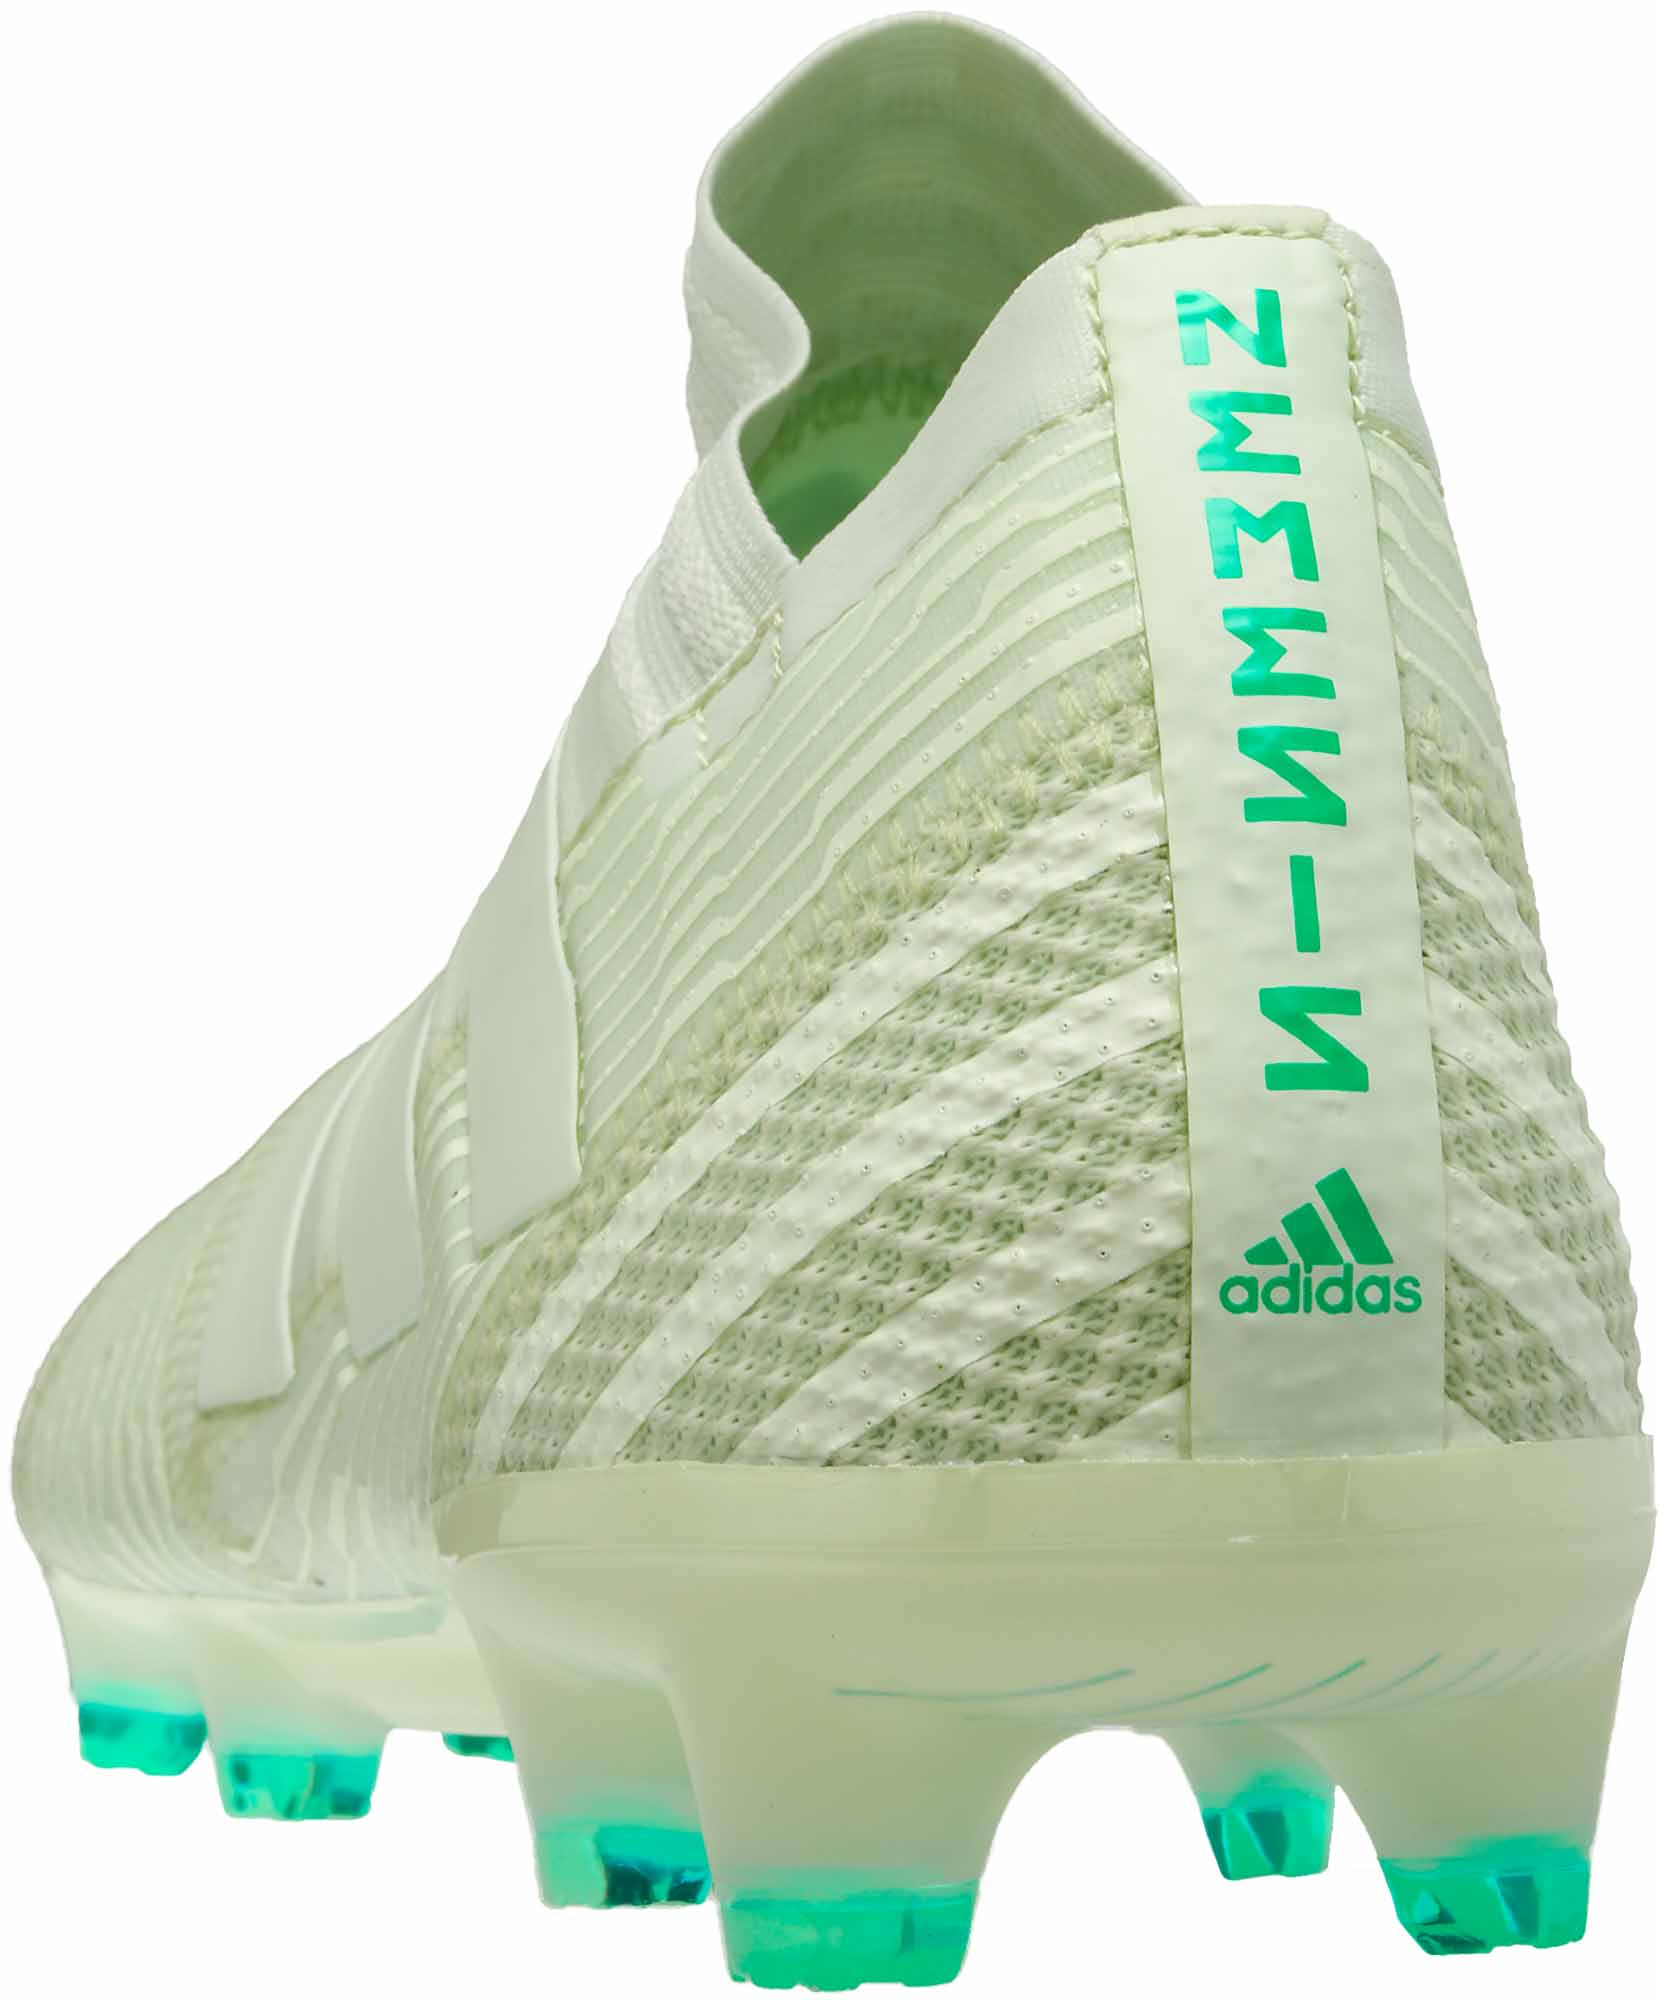 green nemeziz boots